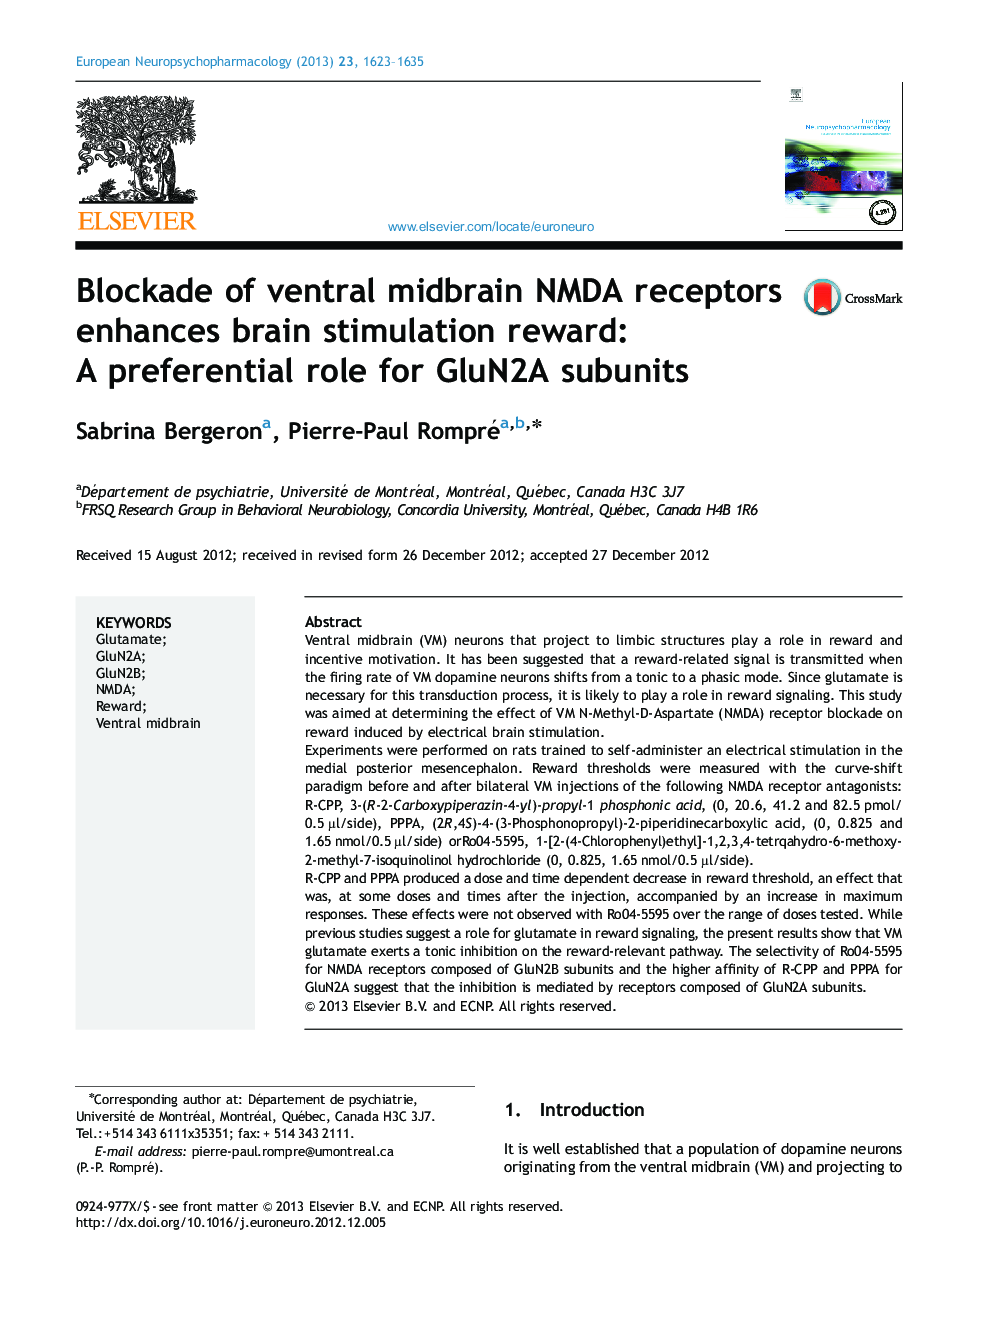 Blockade of ventral midbrain NMDA receptors enhances brain stimulation reward: A preferential role for GluN2A subunits